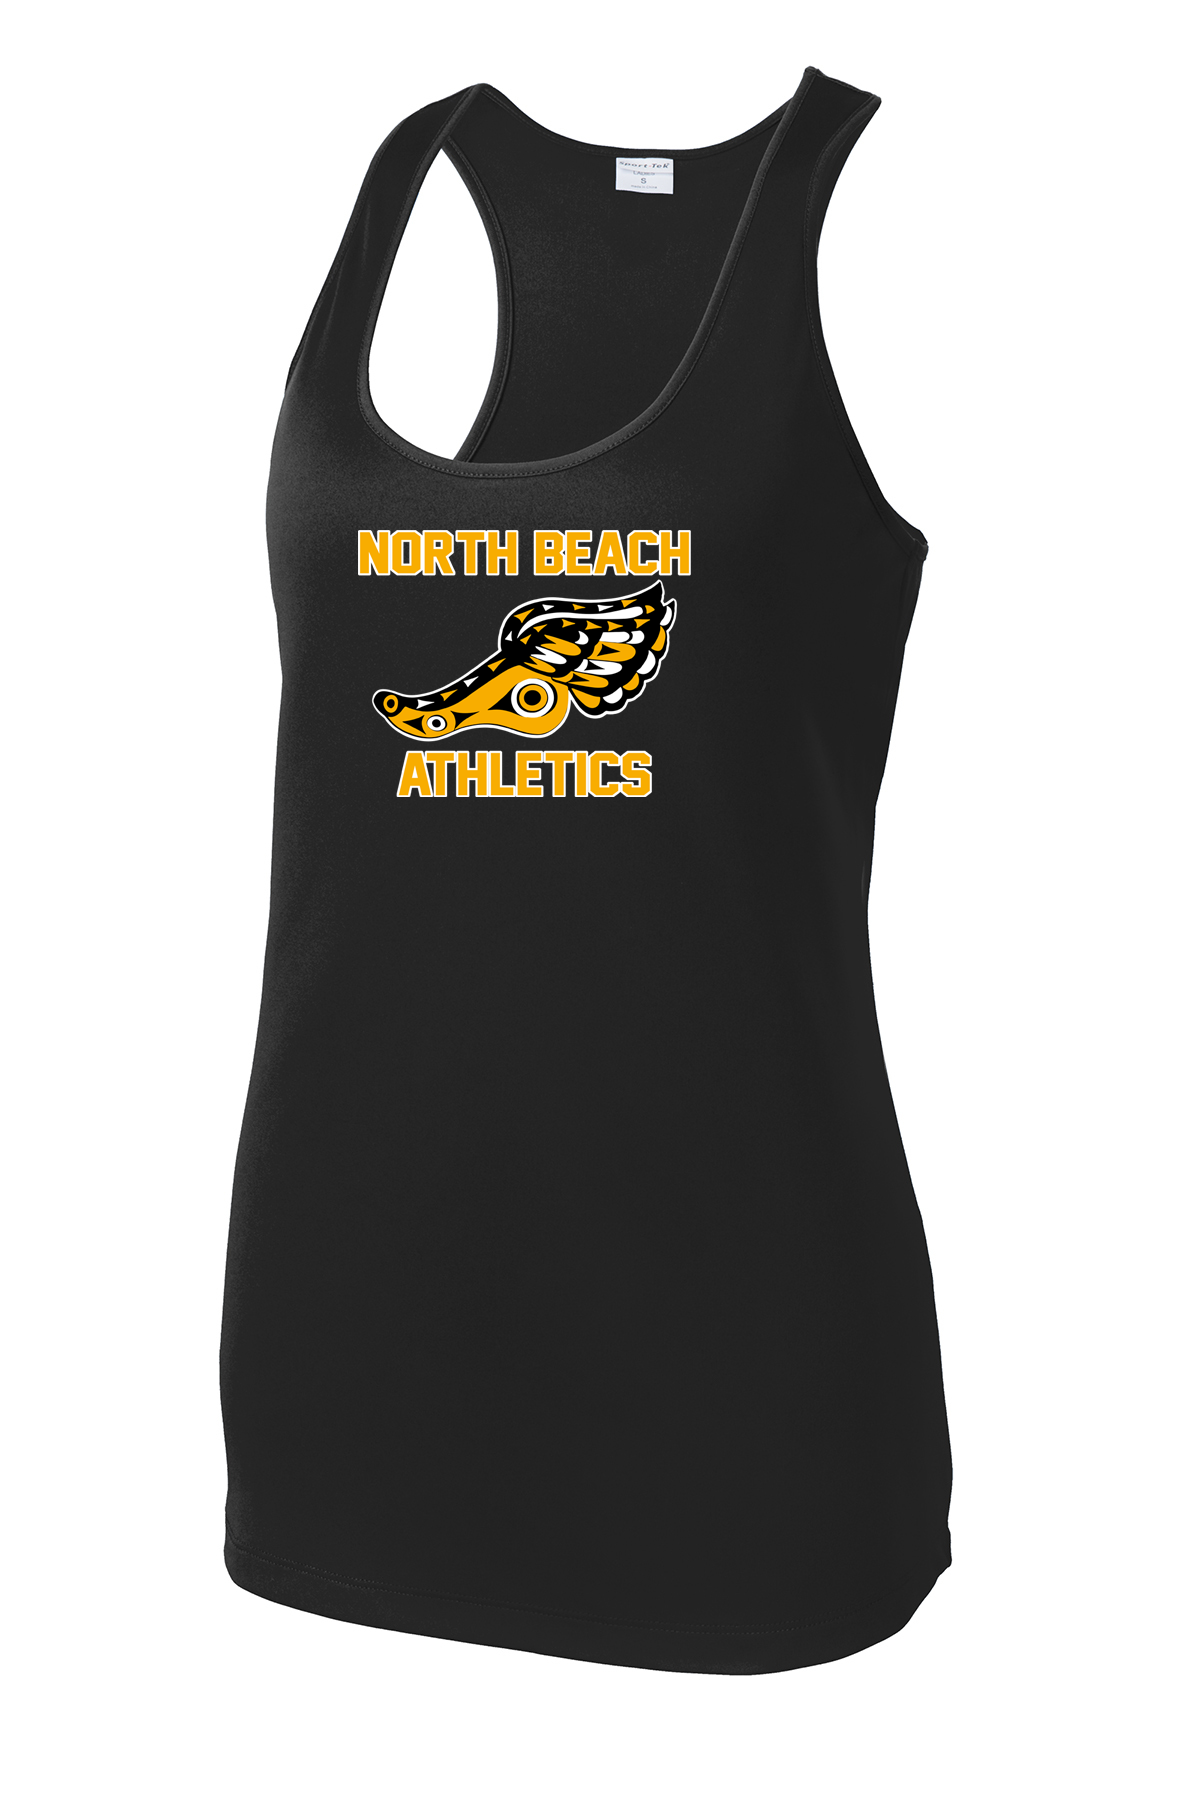 North Beach Athletics Women's Racerback Tank